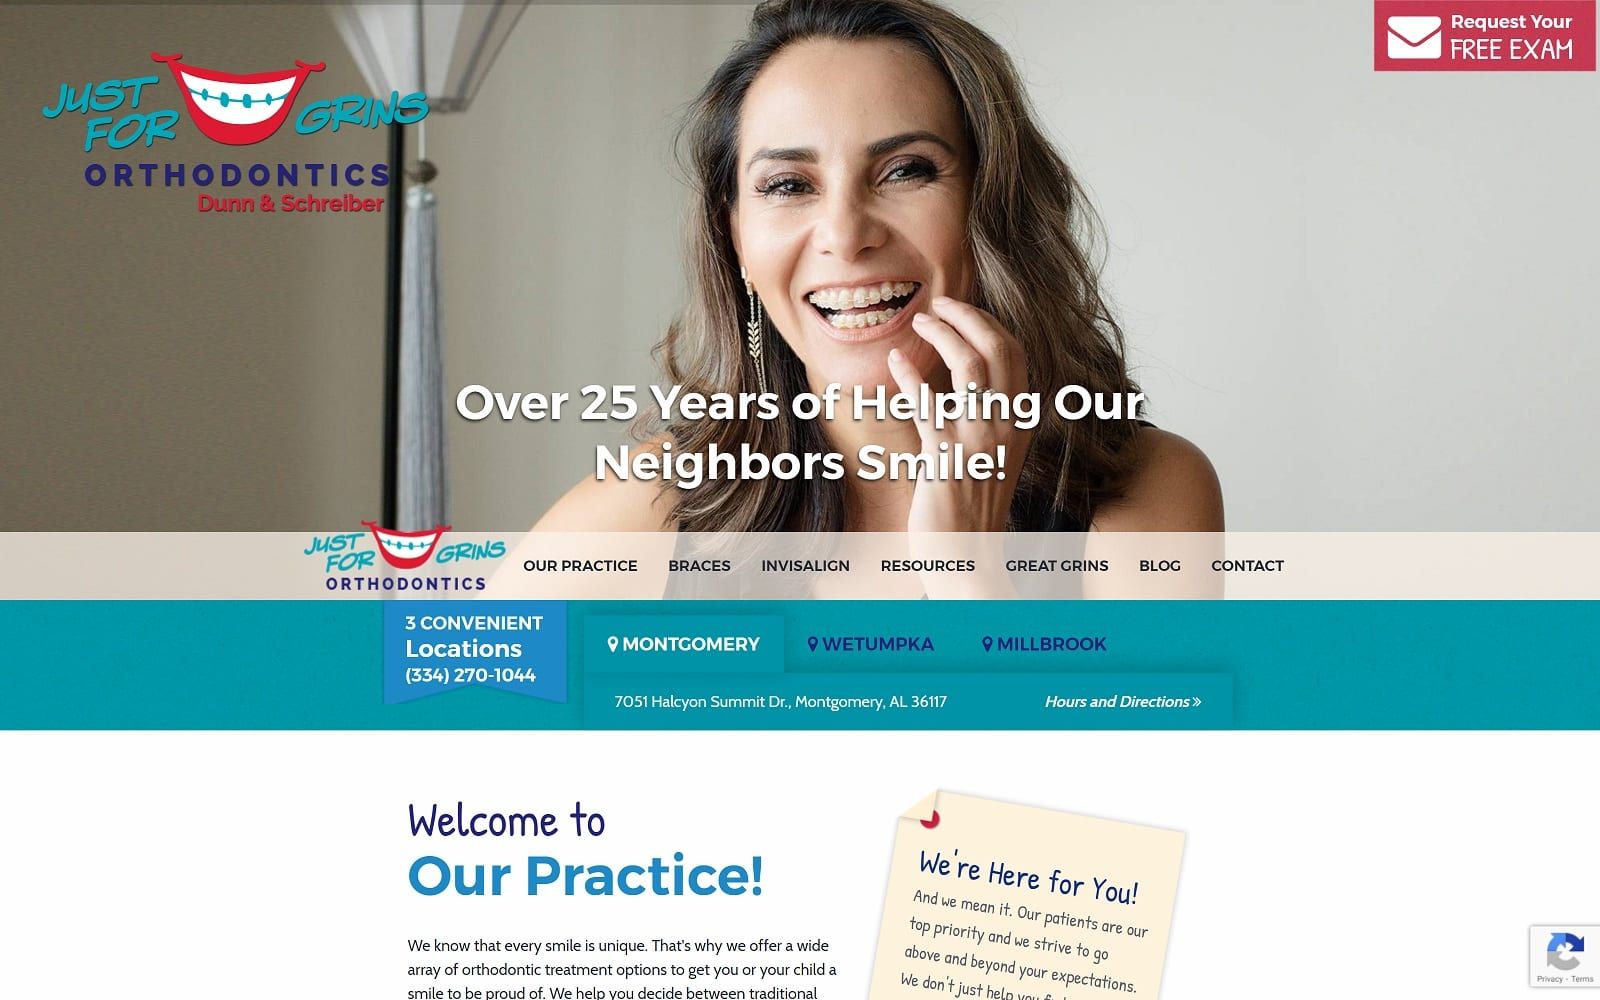 The screenshot of just for grins orthodontics justforgrinsortho. Com website